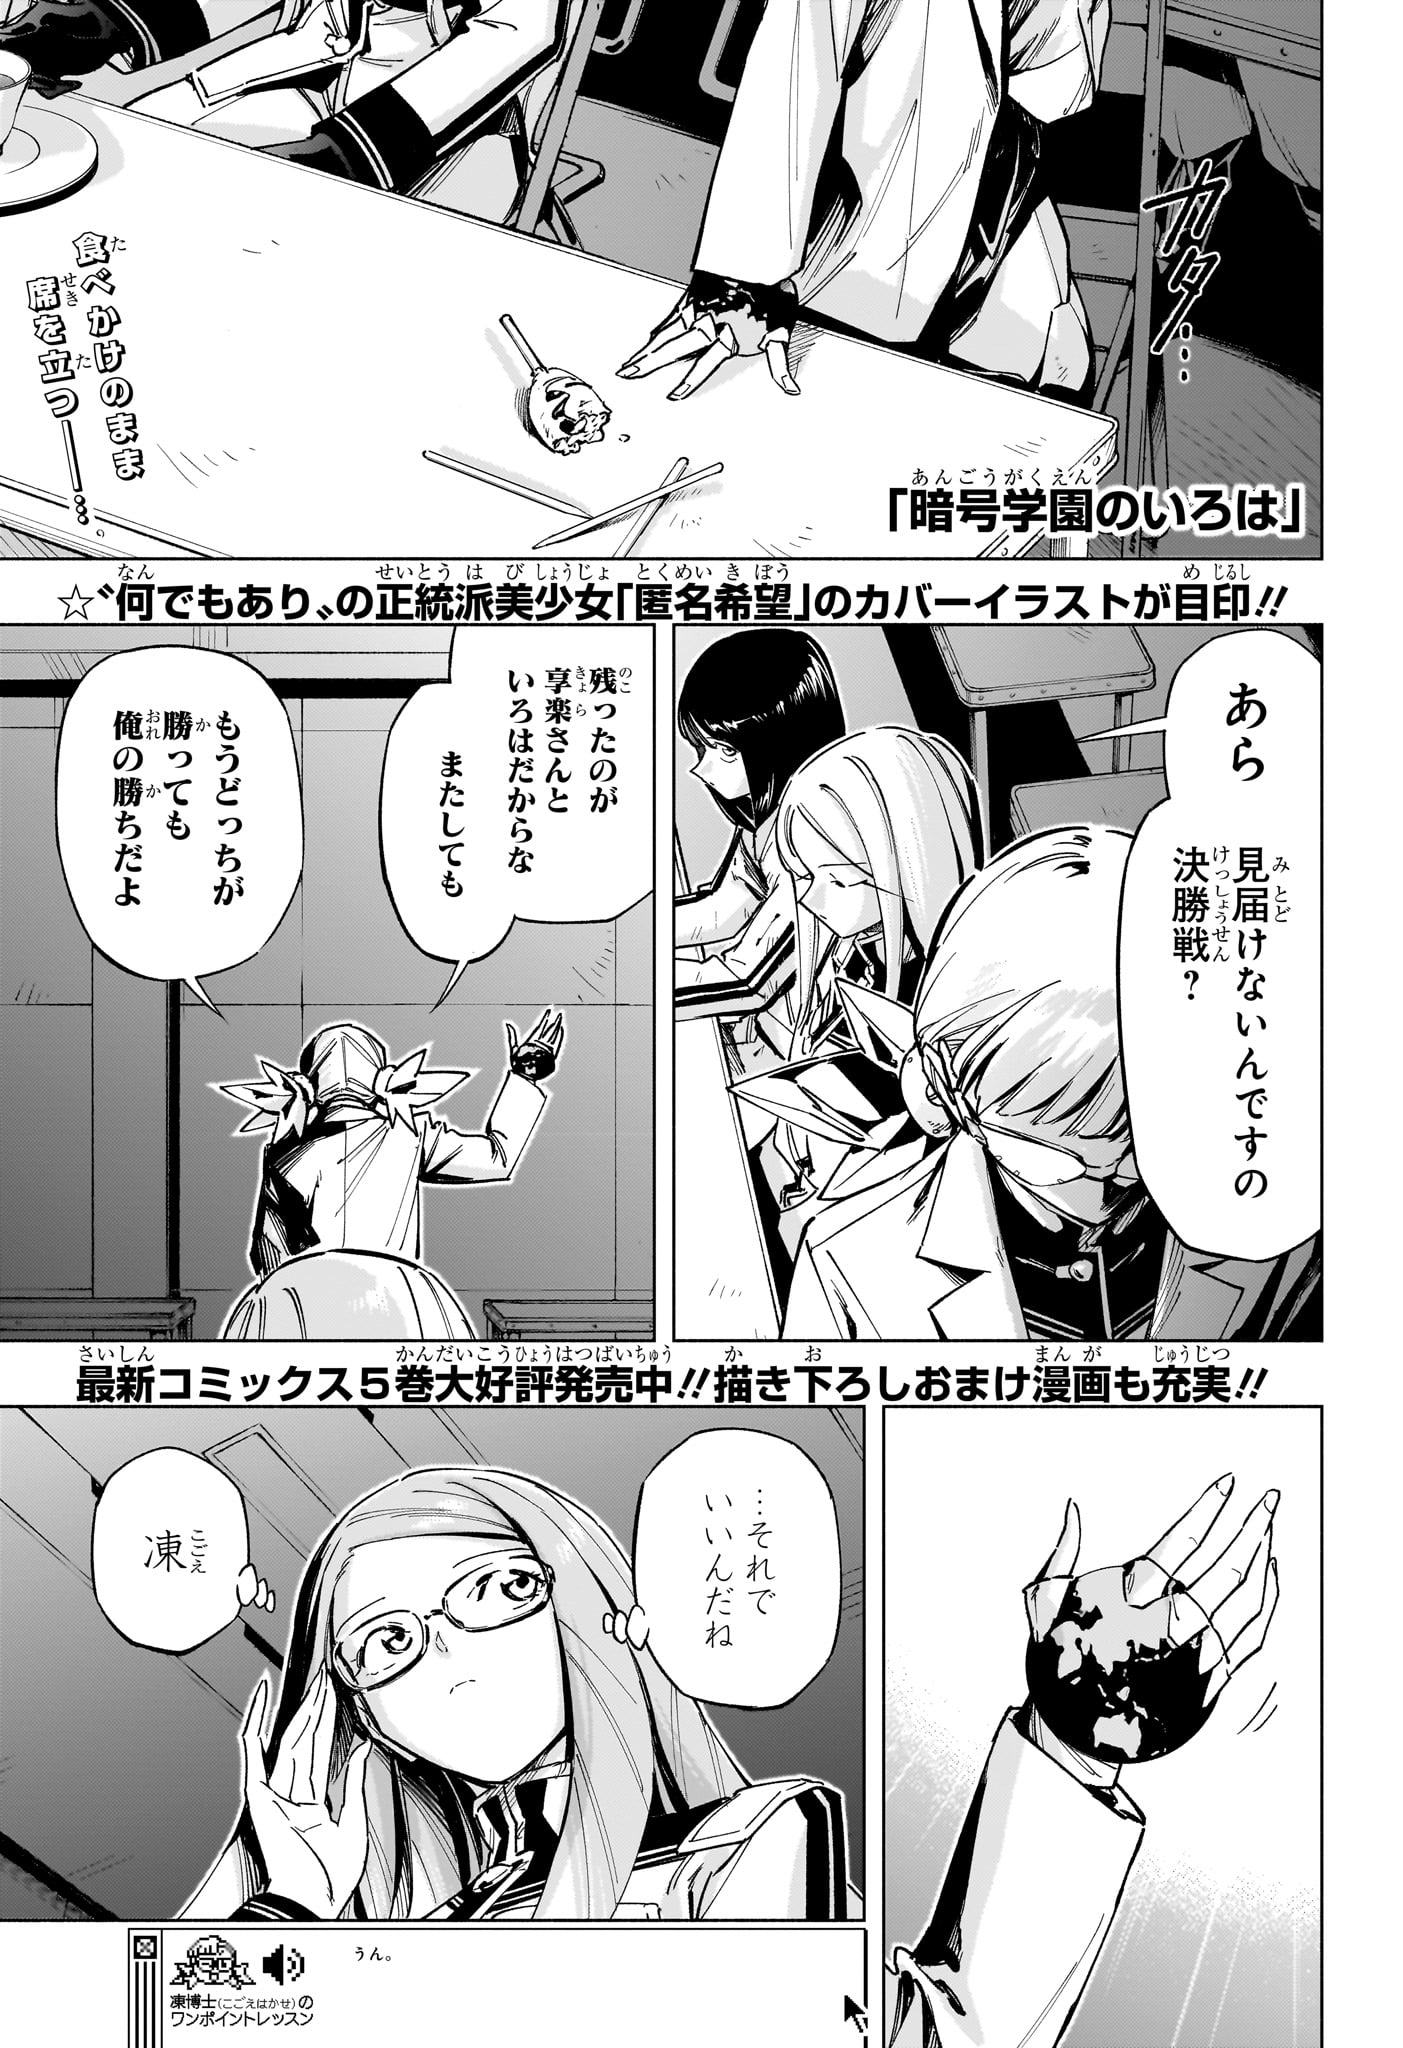 Angou Gakuen no Iroha - Chapter 56 - Page 1